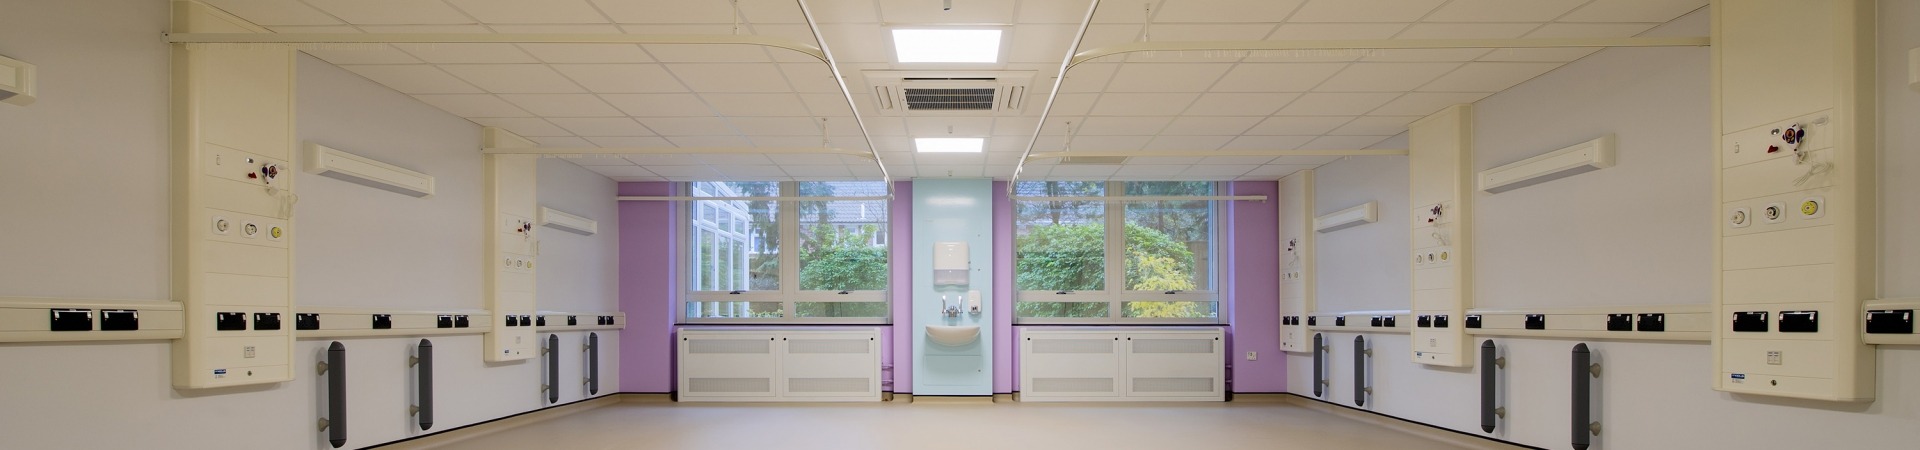 Tamlite Crawley Hospital Healthcare LED Lighting Case Study header